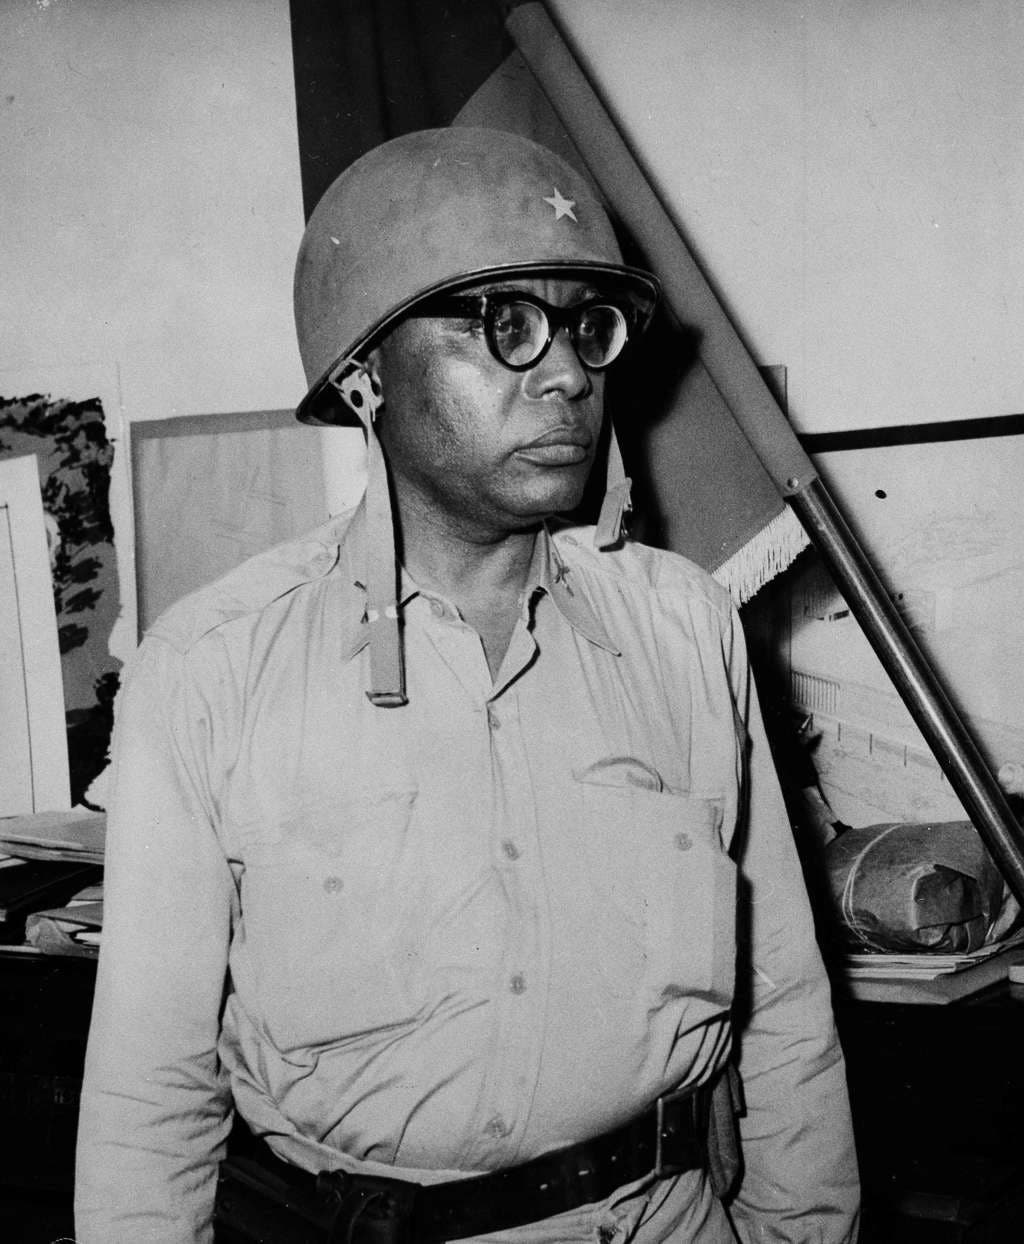 François Duvalier in 1958 in a military uniform